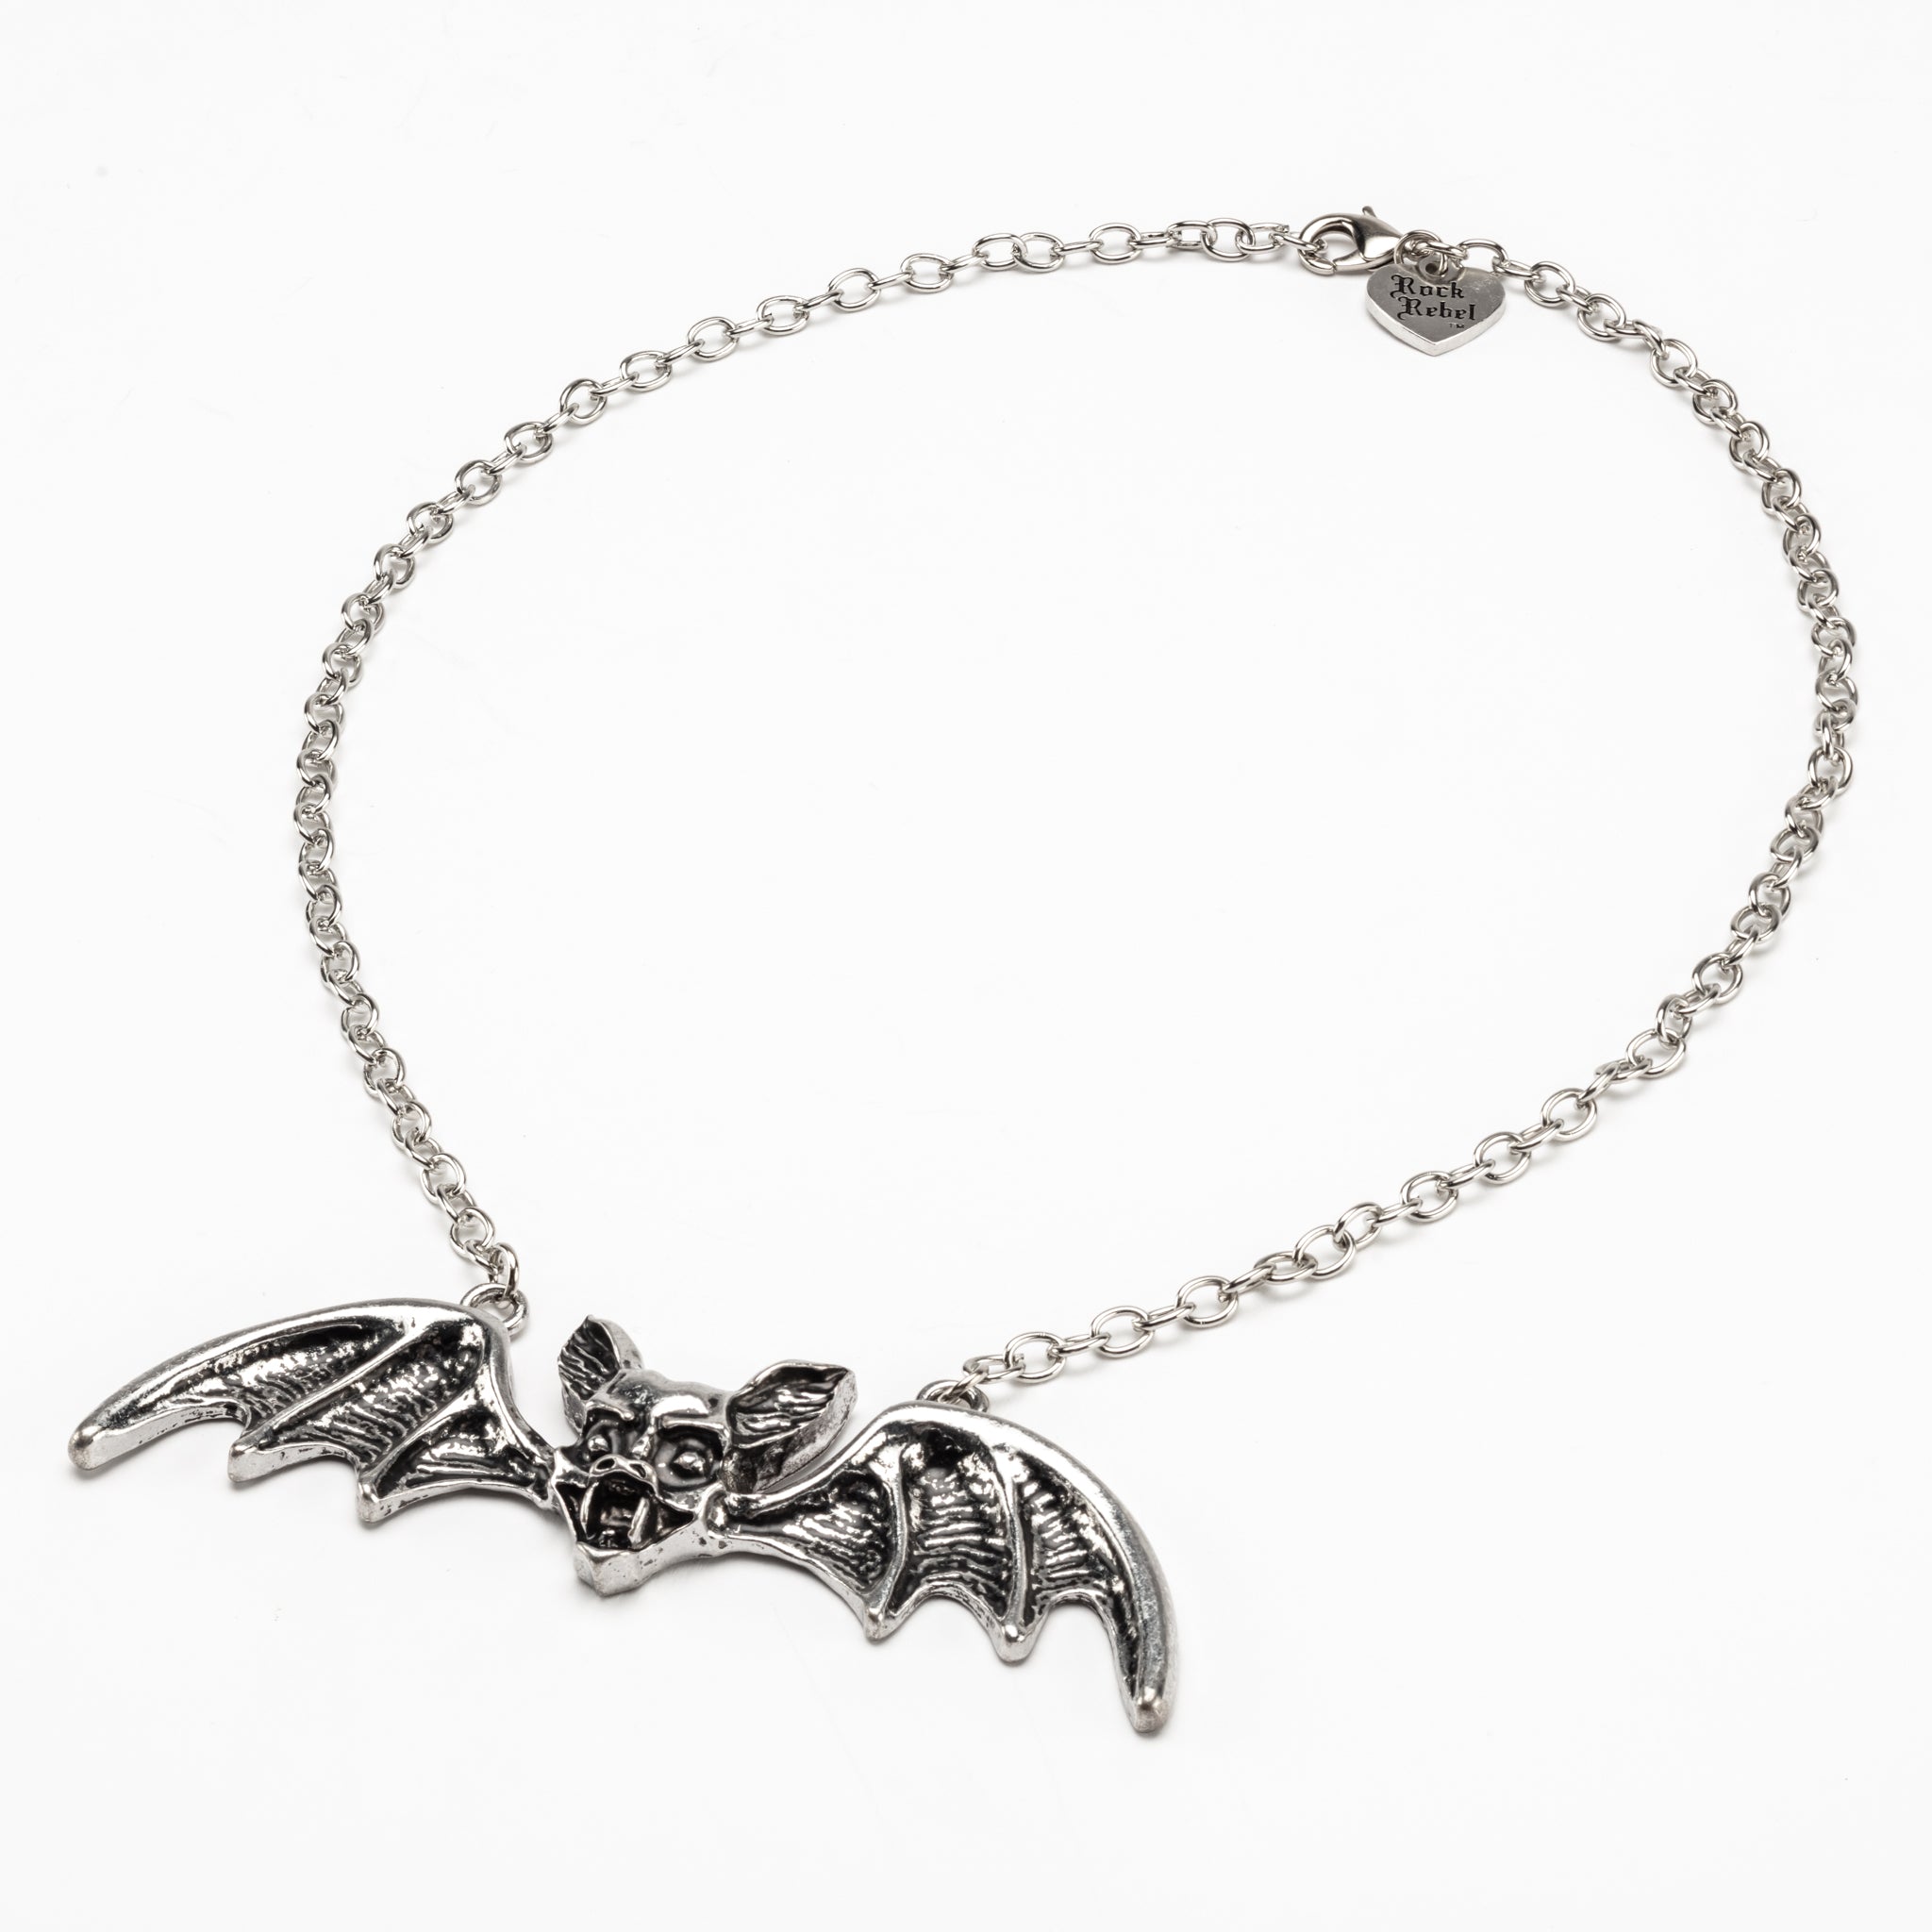 Vampire Bat Pendant Necklace - Antique Silver Plating